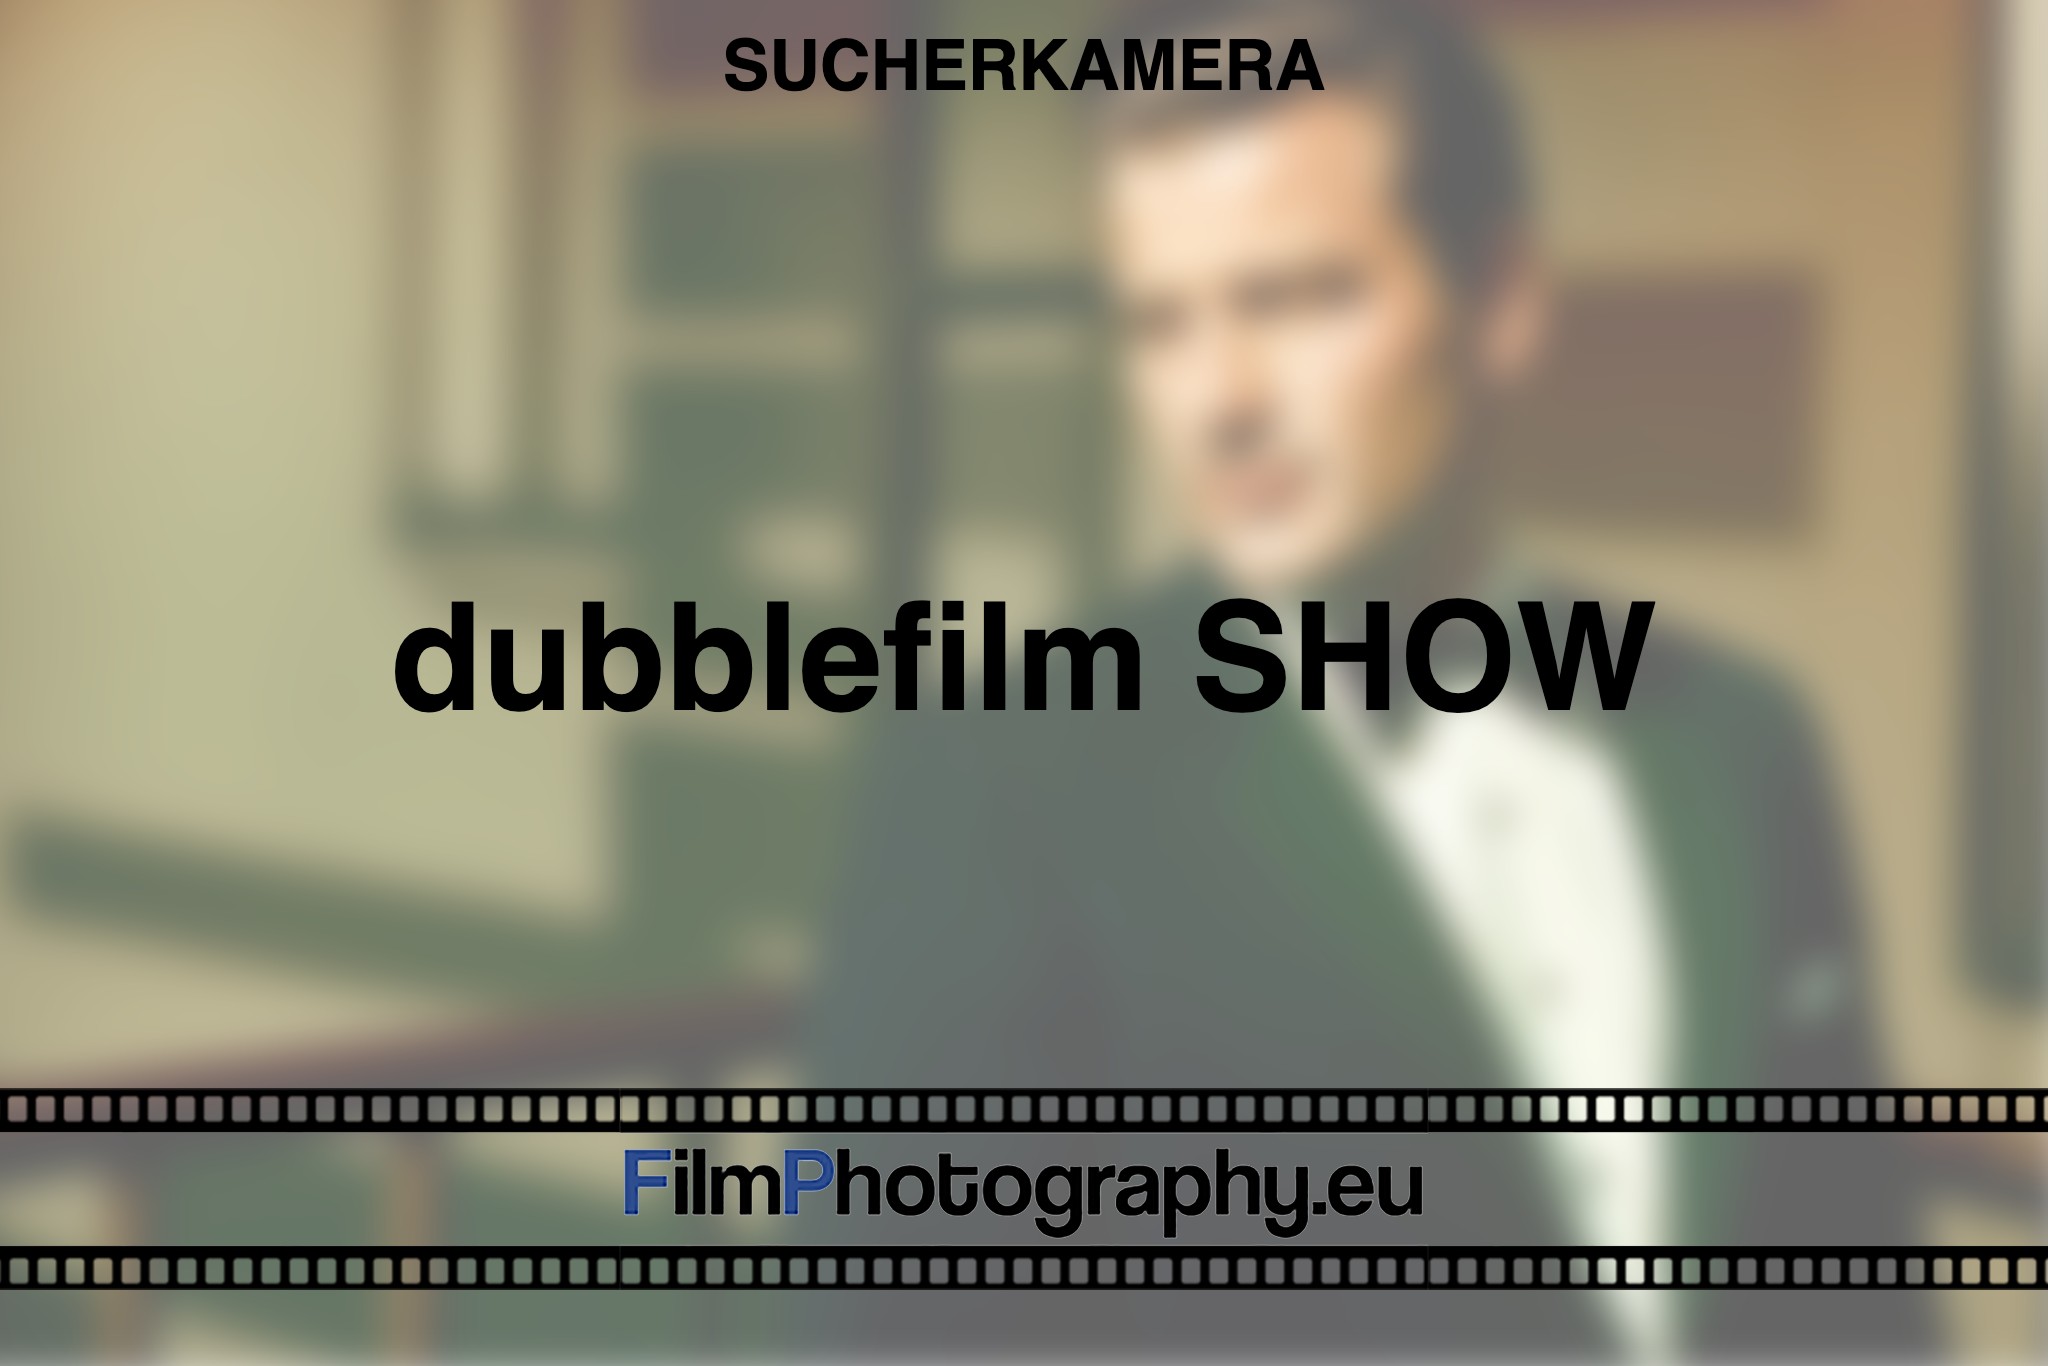 dubblefilm-show-sucherkamera-bnv